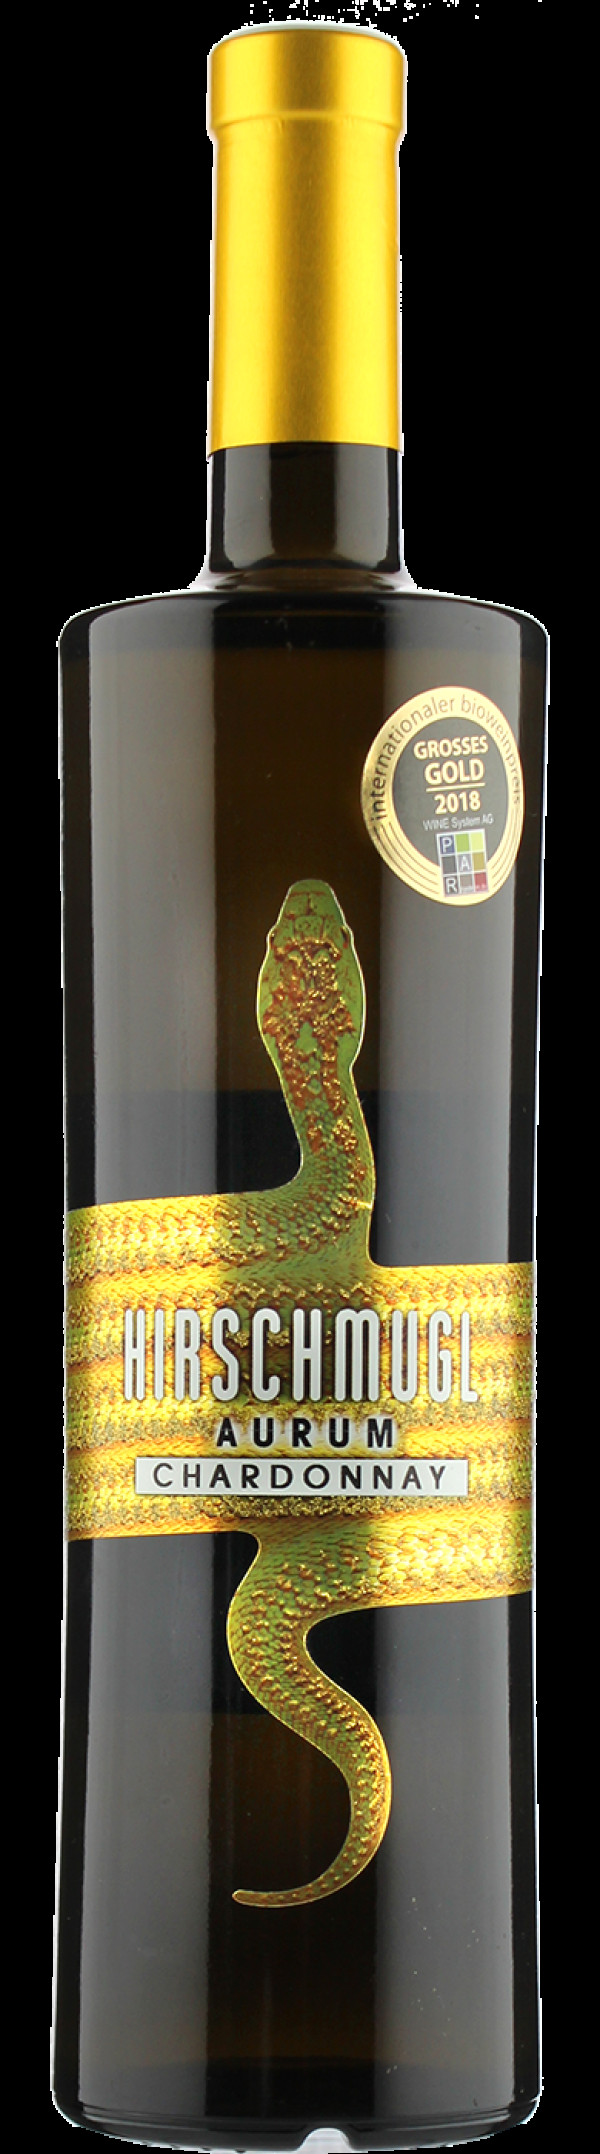 Chardonnay Aurum 2011 